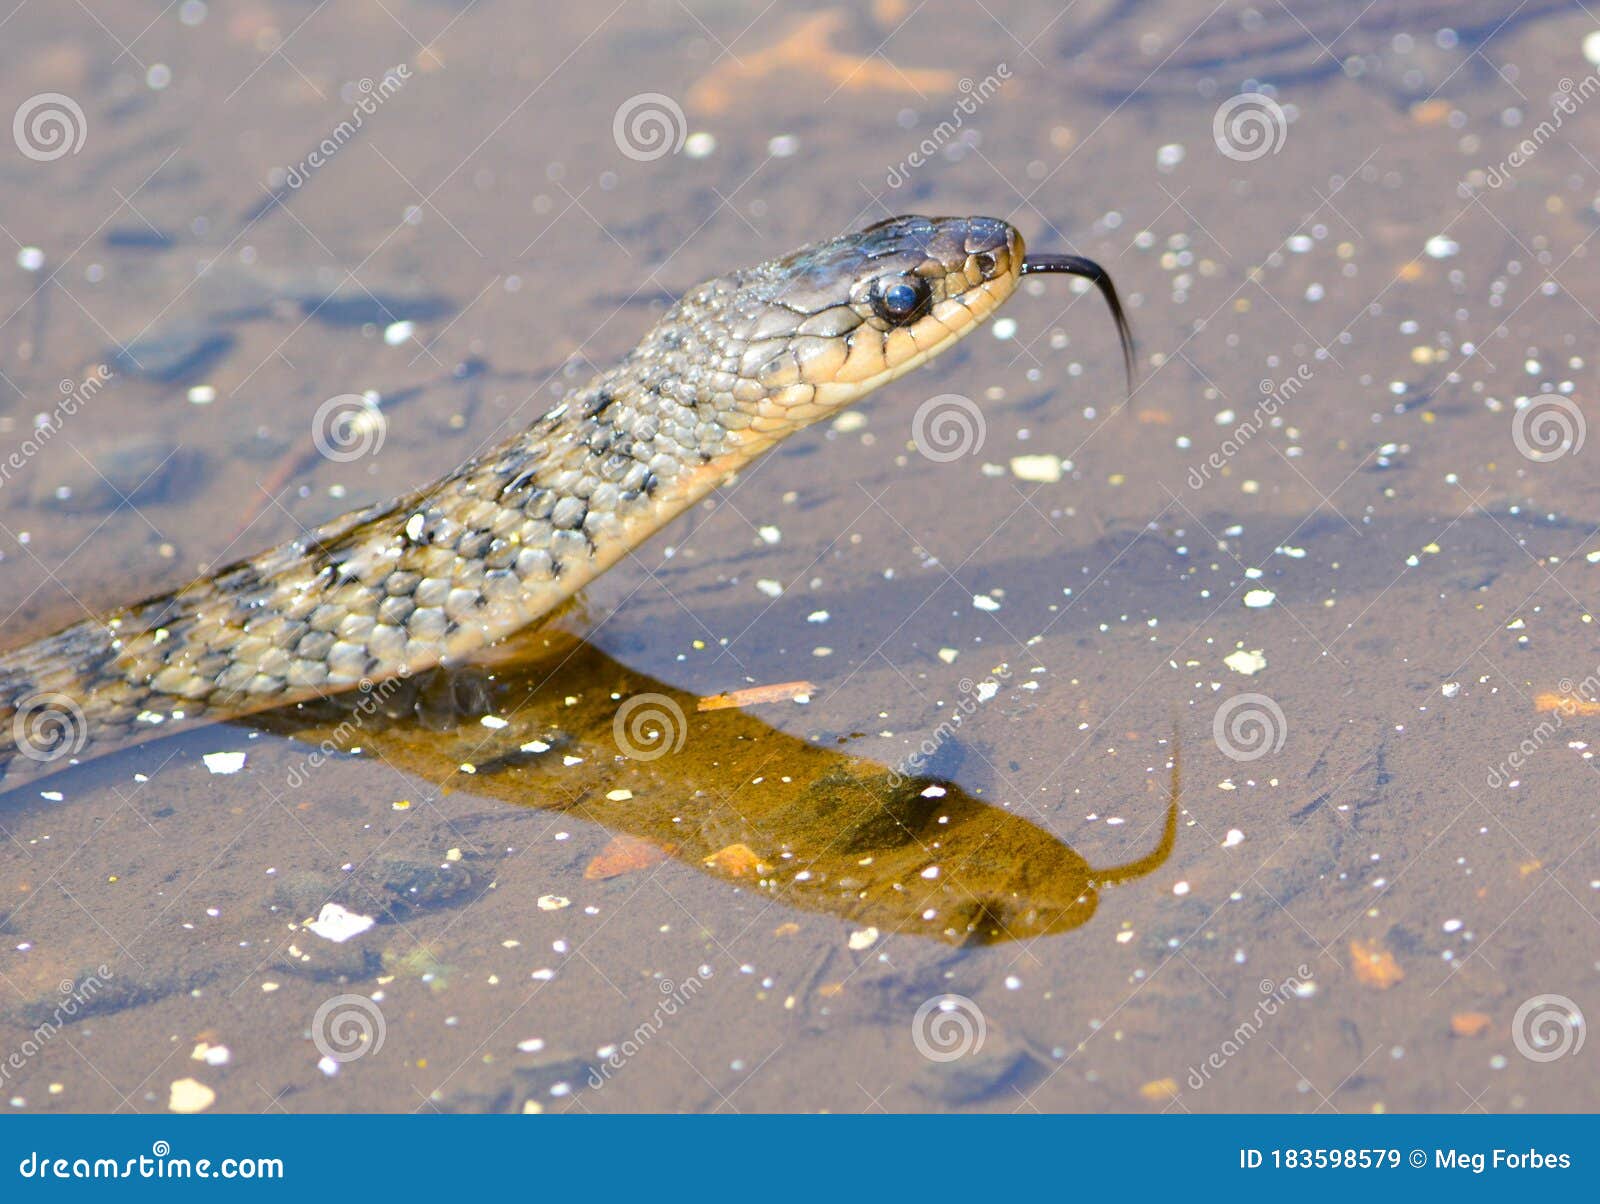 Keelback Snake in Queensland, Australia Stock Image Image of icon, danger: